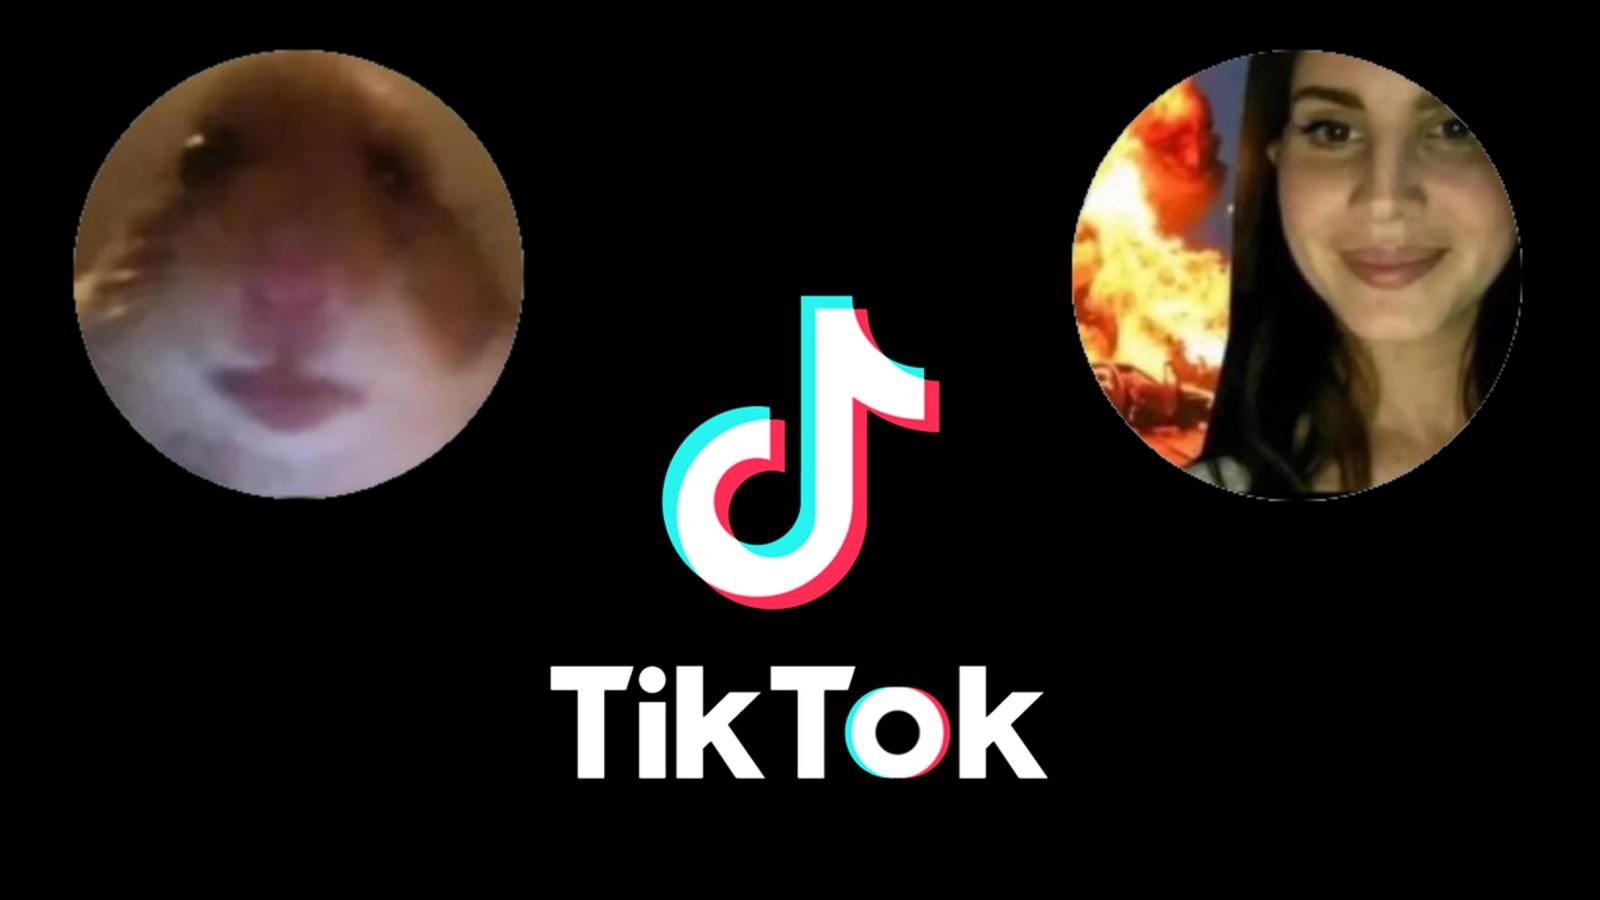 TikTok logo alongside the TikTok cult profile pictures